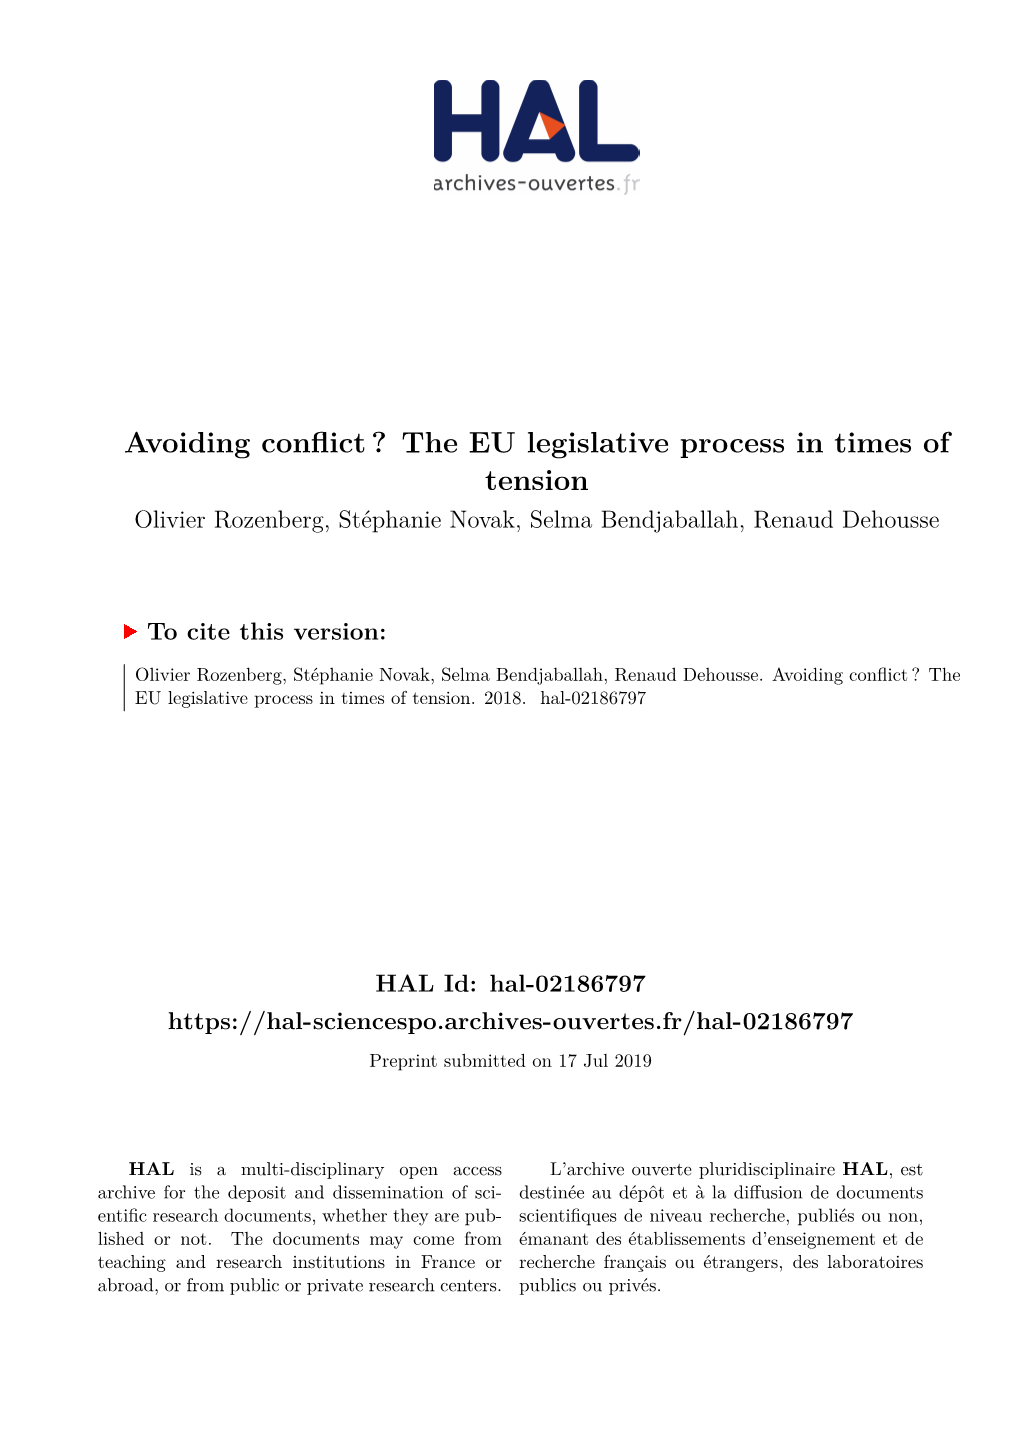 Avoiding Conflict? the EU Legislative Process in Times of Tension